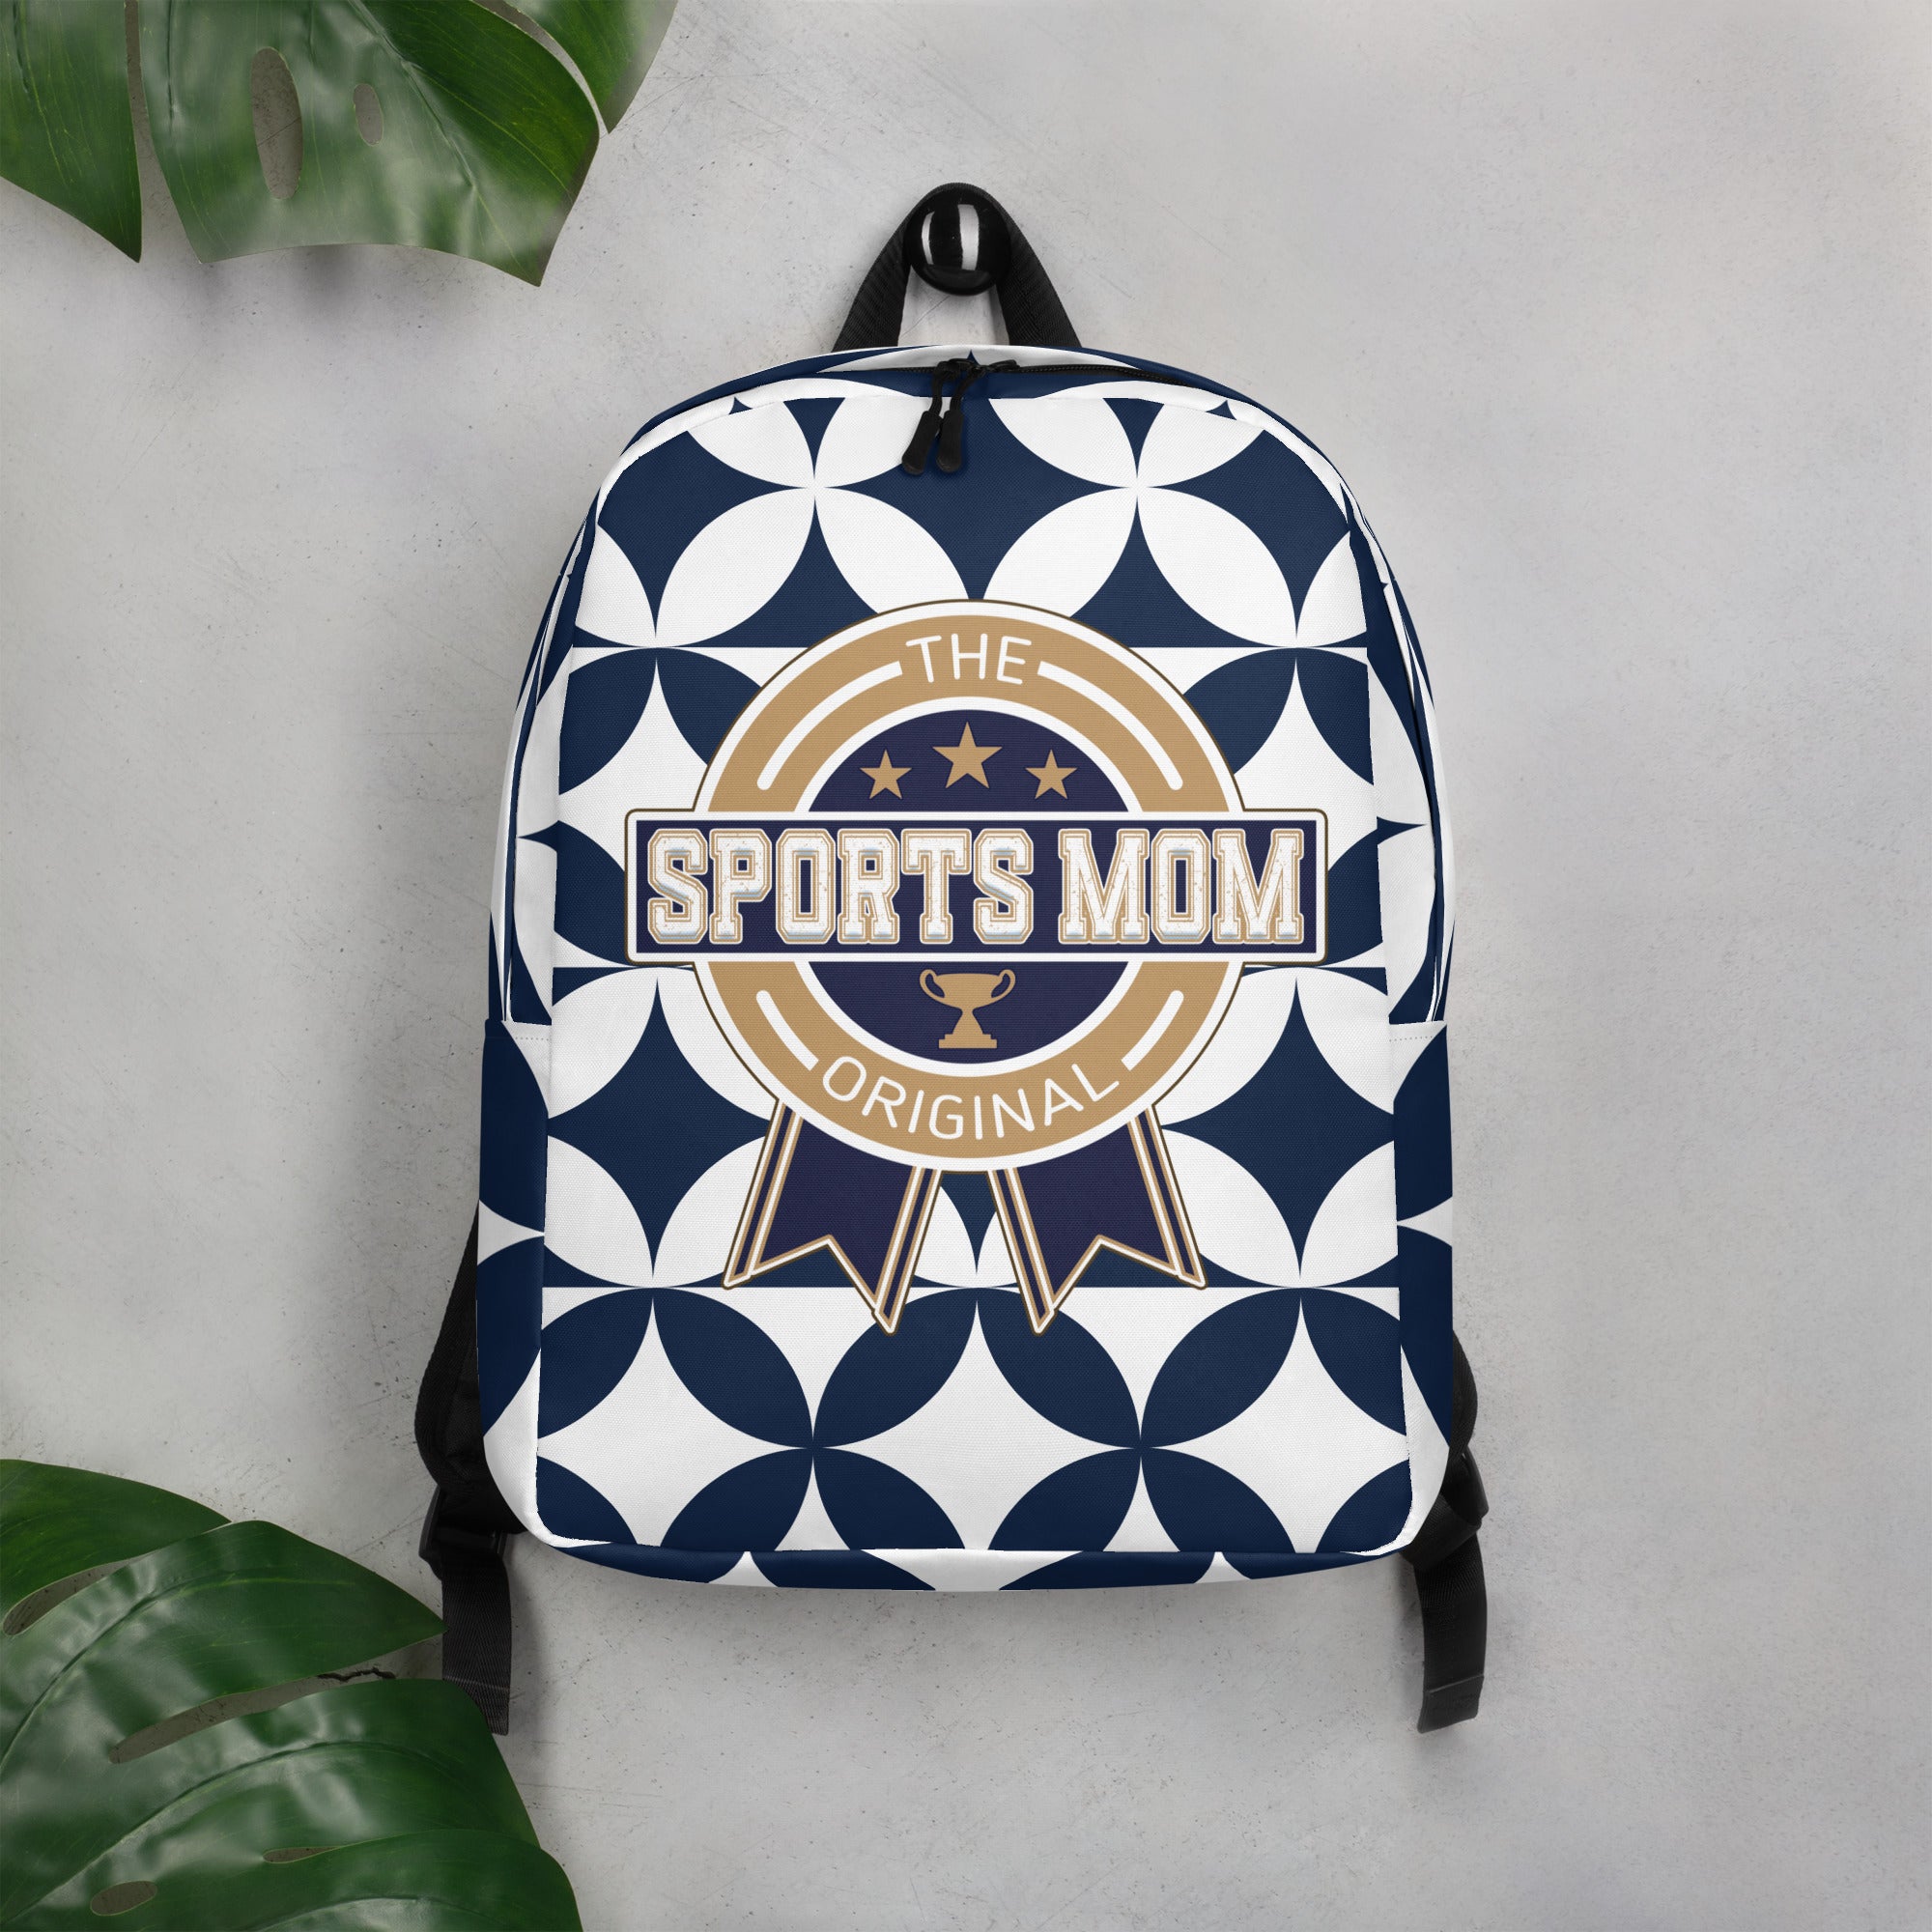 Sports Mom Minimalist Backpack - Away Game - Diamonds or Flowers?